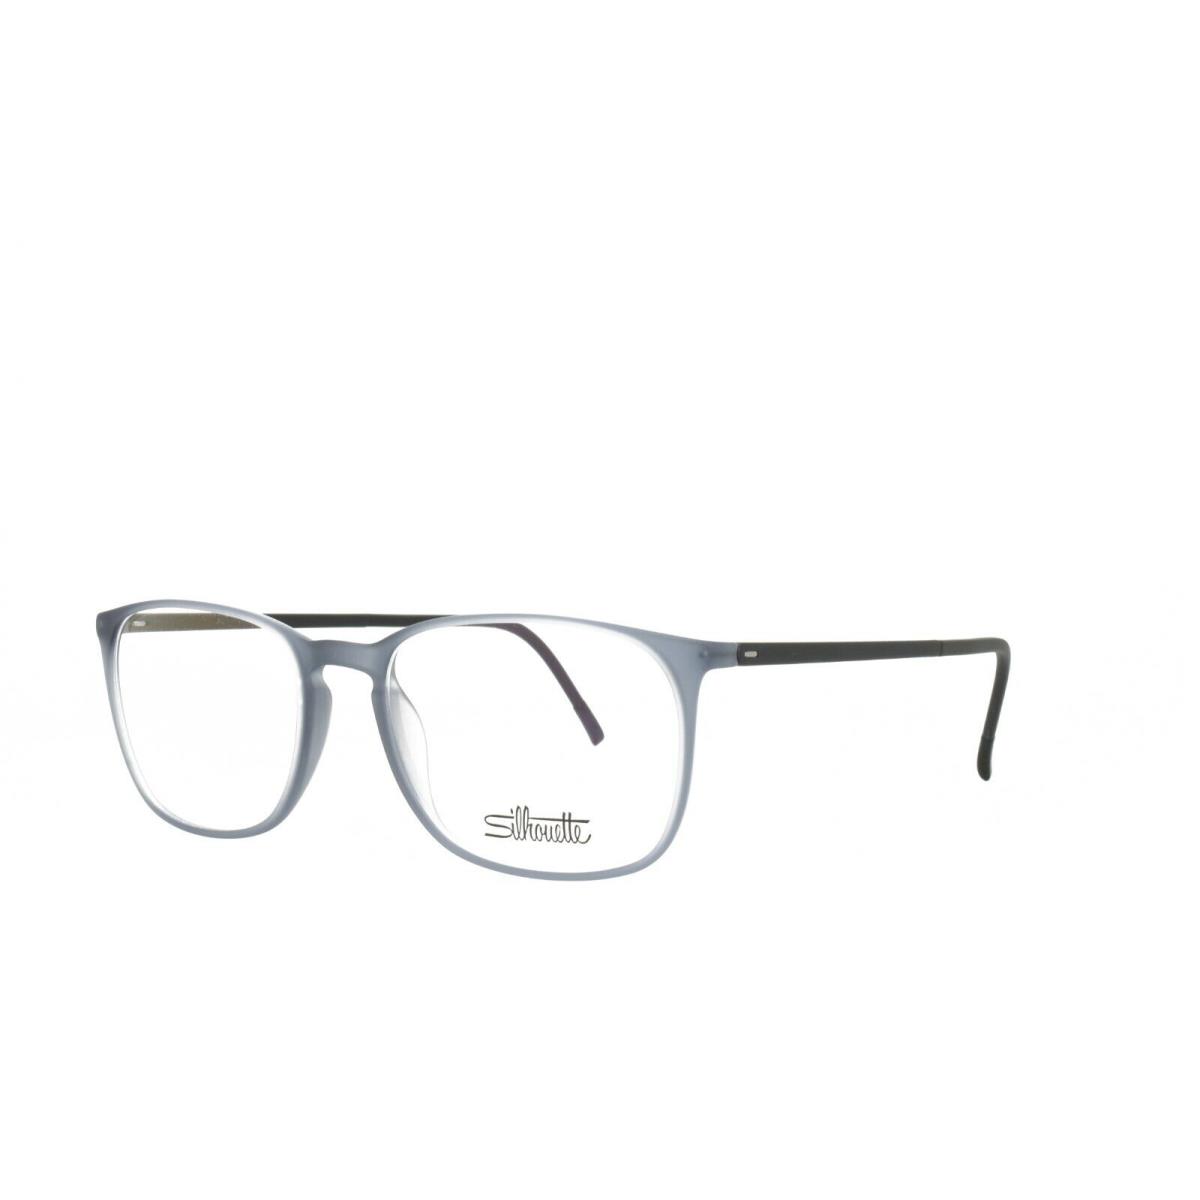 Silhouette Spx Illusion 2911 75 6510 Eyeglasses 55-18-145 Blue-grey